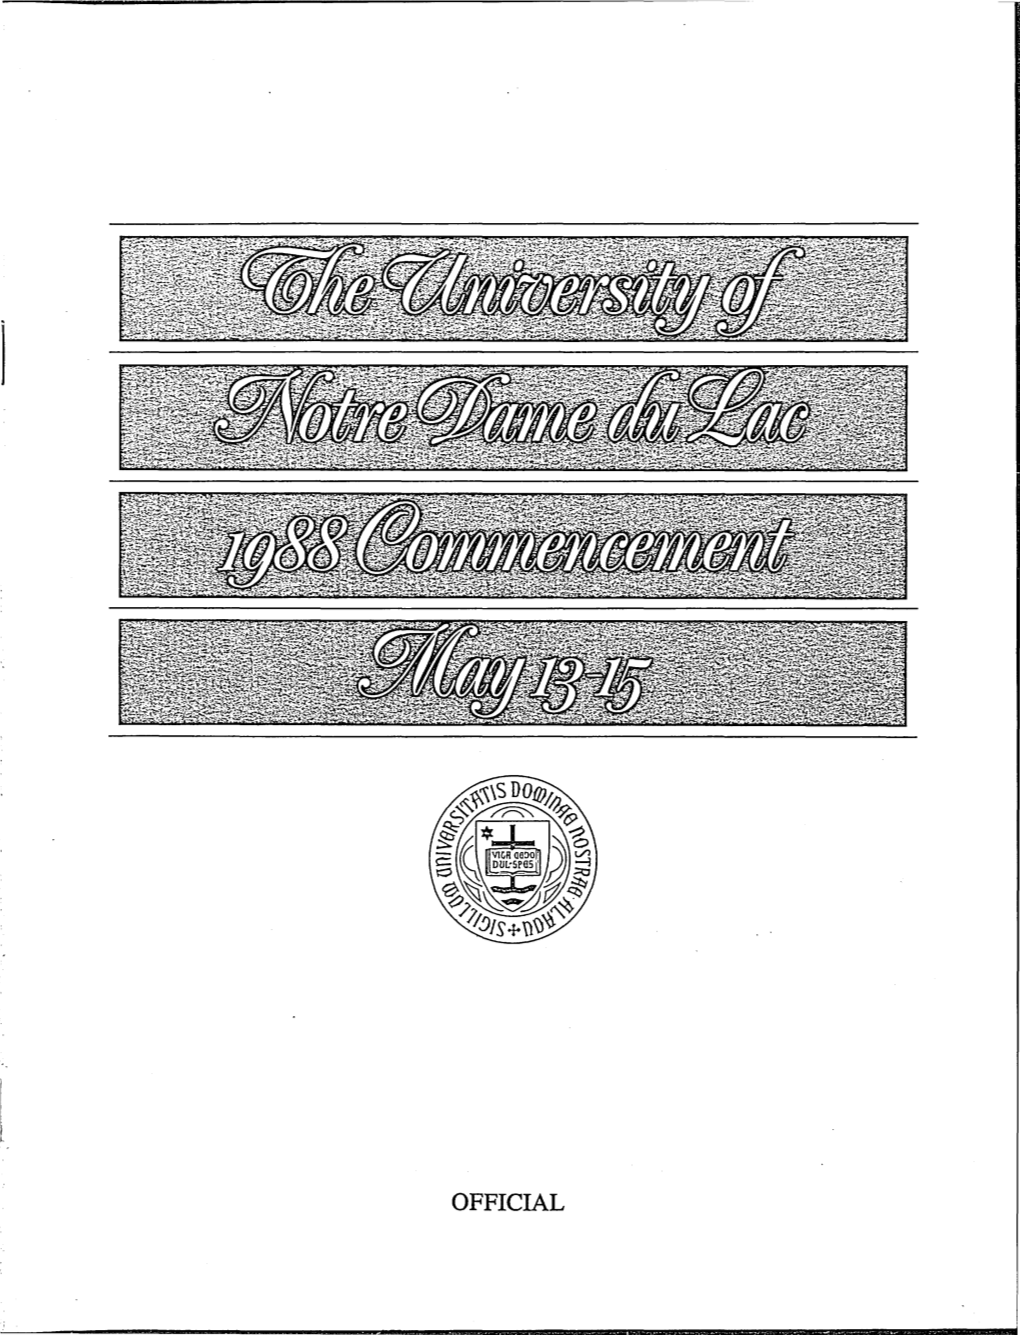 1988-05-15 University of Notre Dame Commencement Program